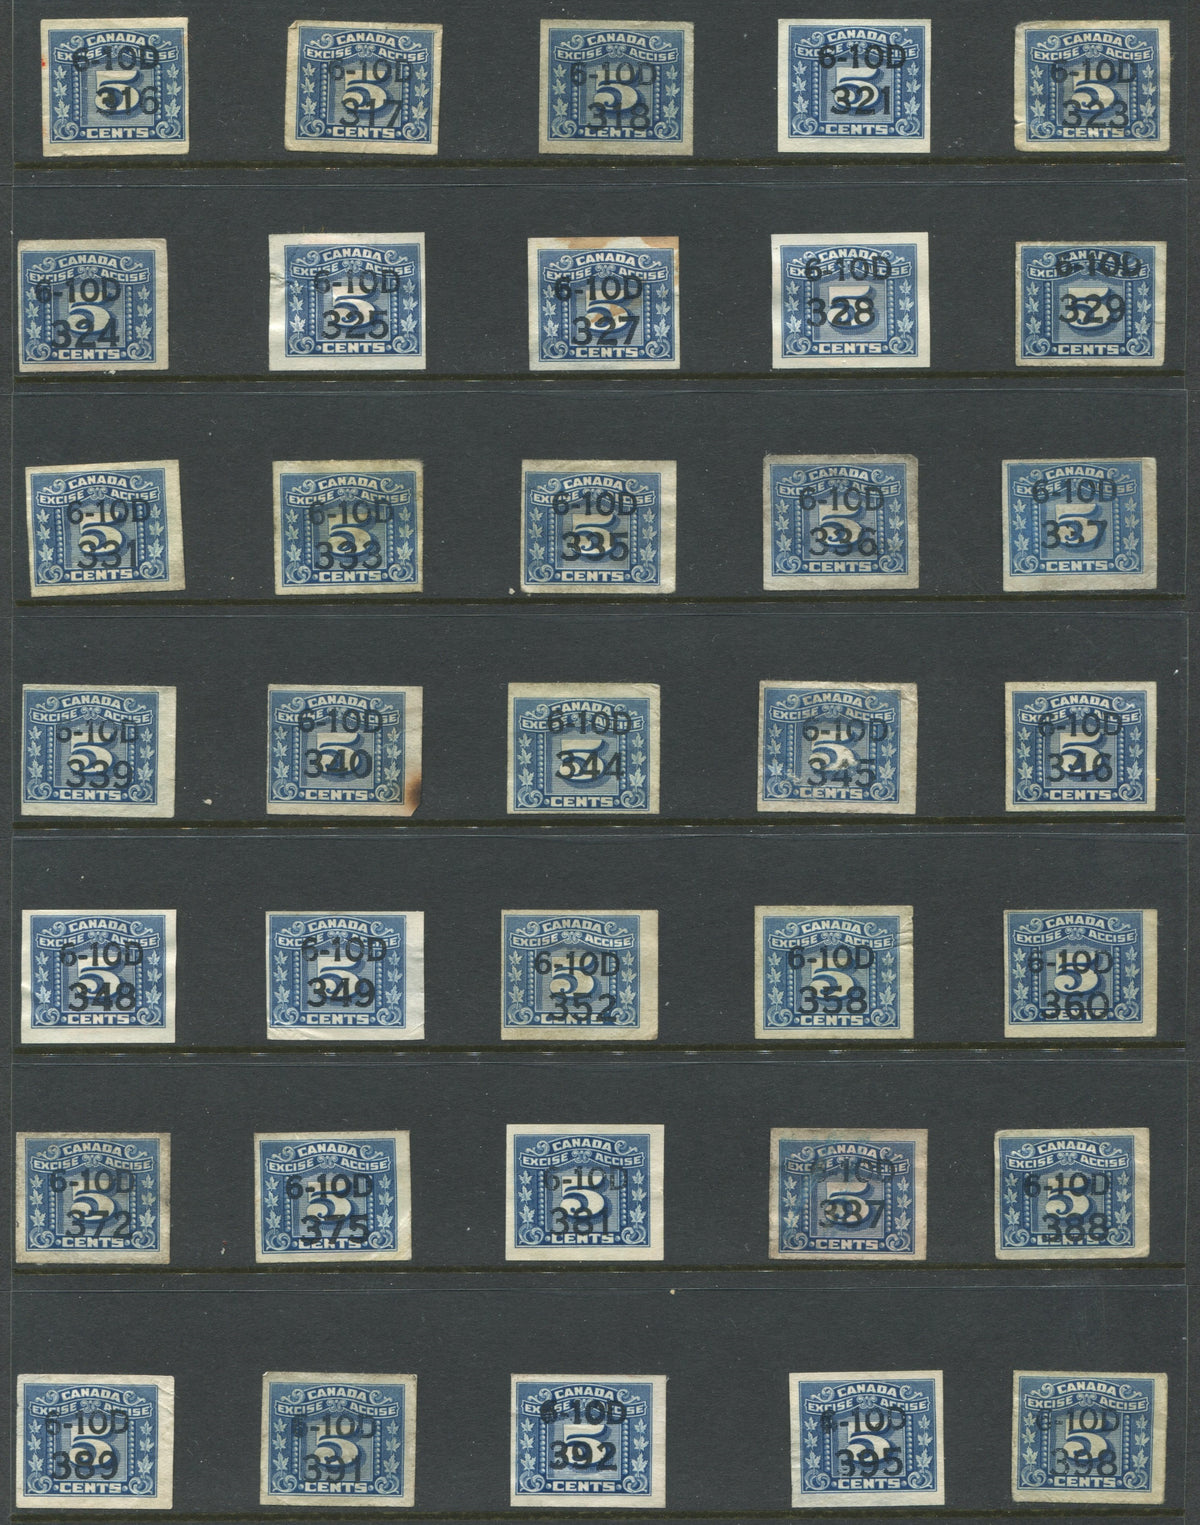 0099FX1904 - Canada Excise Stamp Precancel Collection - FX99